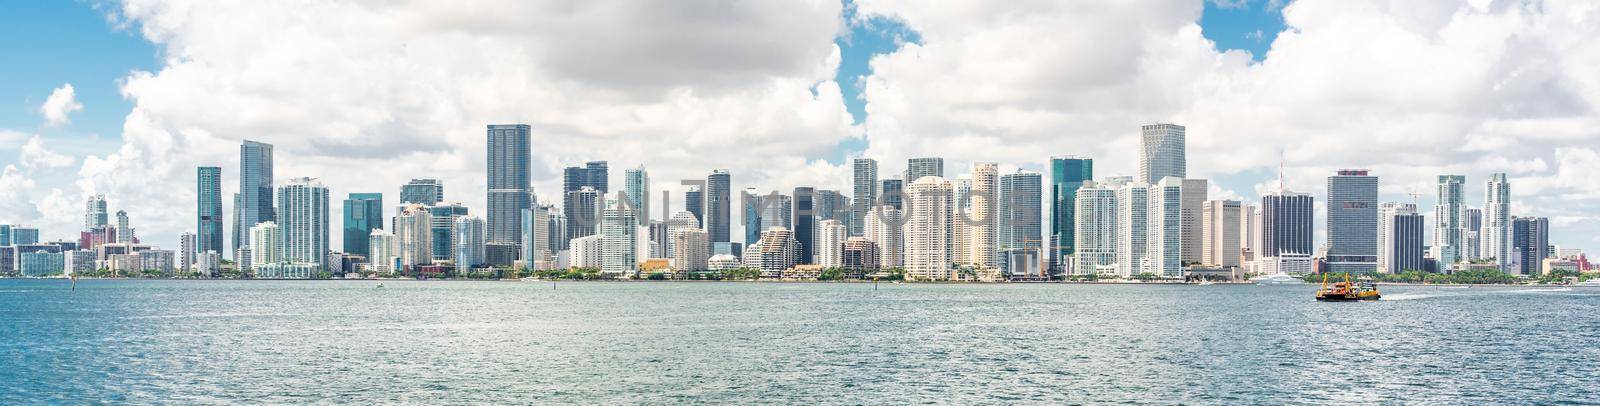 Miami Downtown skyline in daytime with Biscayne Bay by Mariakray